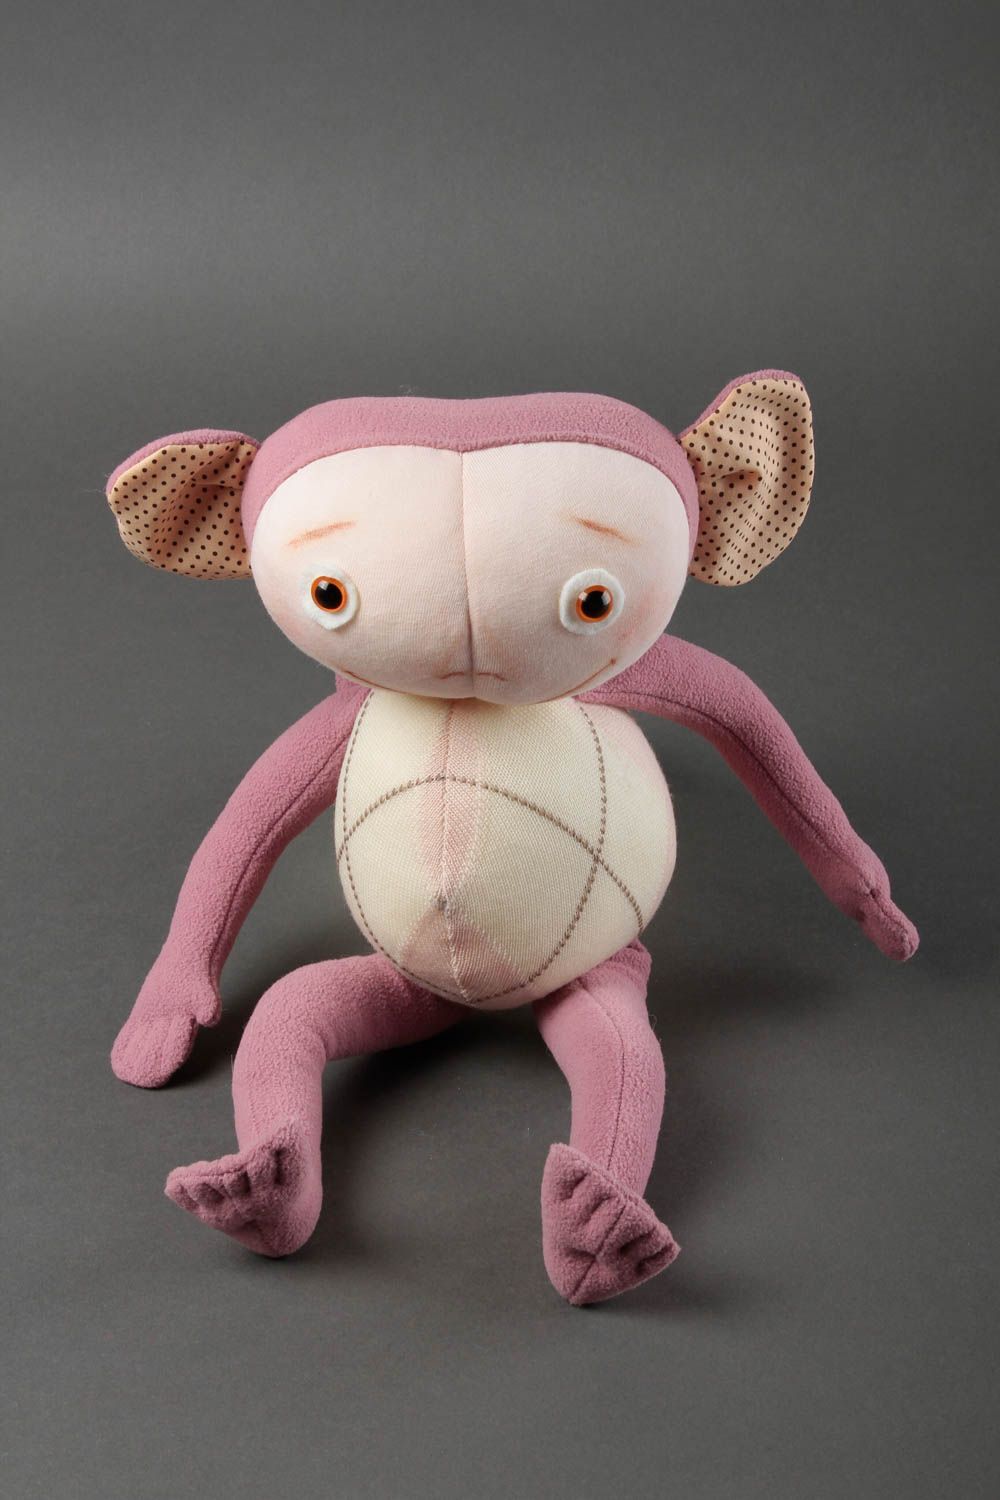 Muñeco artesanal juguete original elemento decorativo monito rosado original foto 3